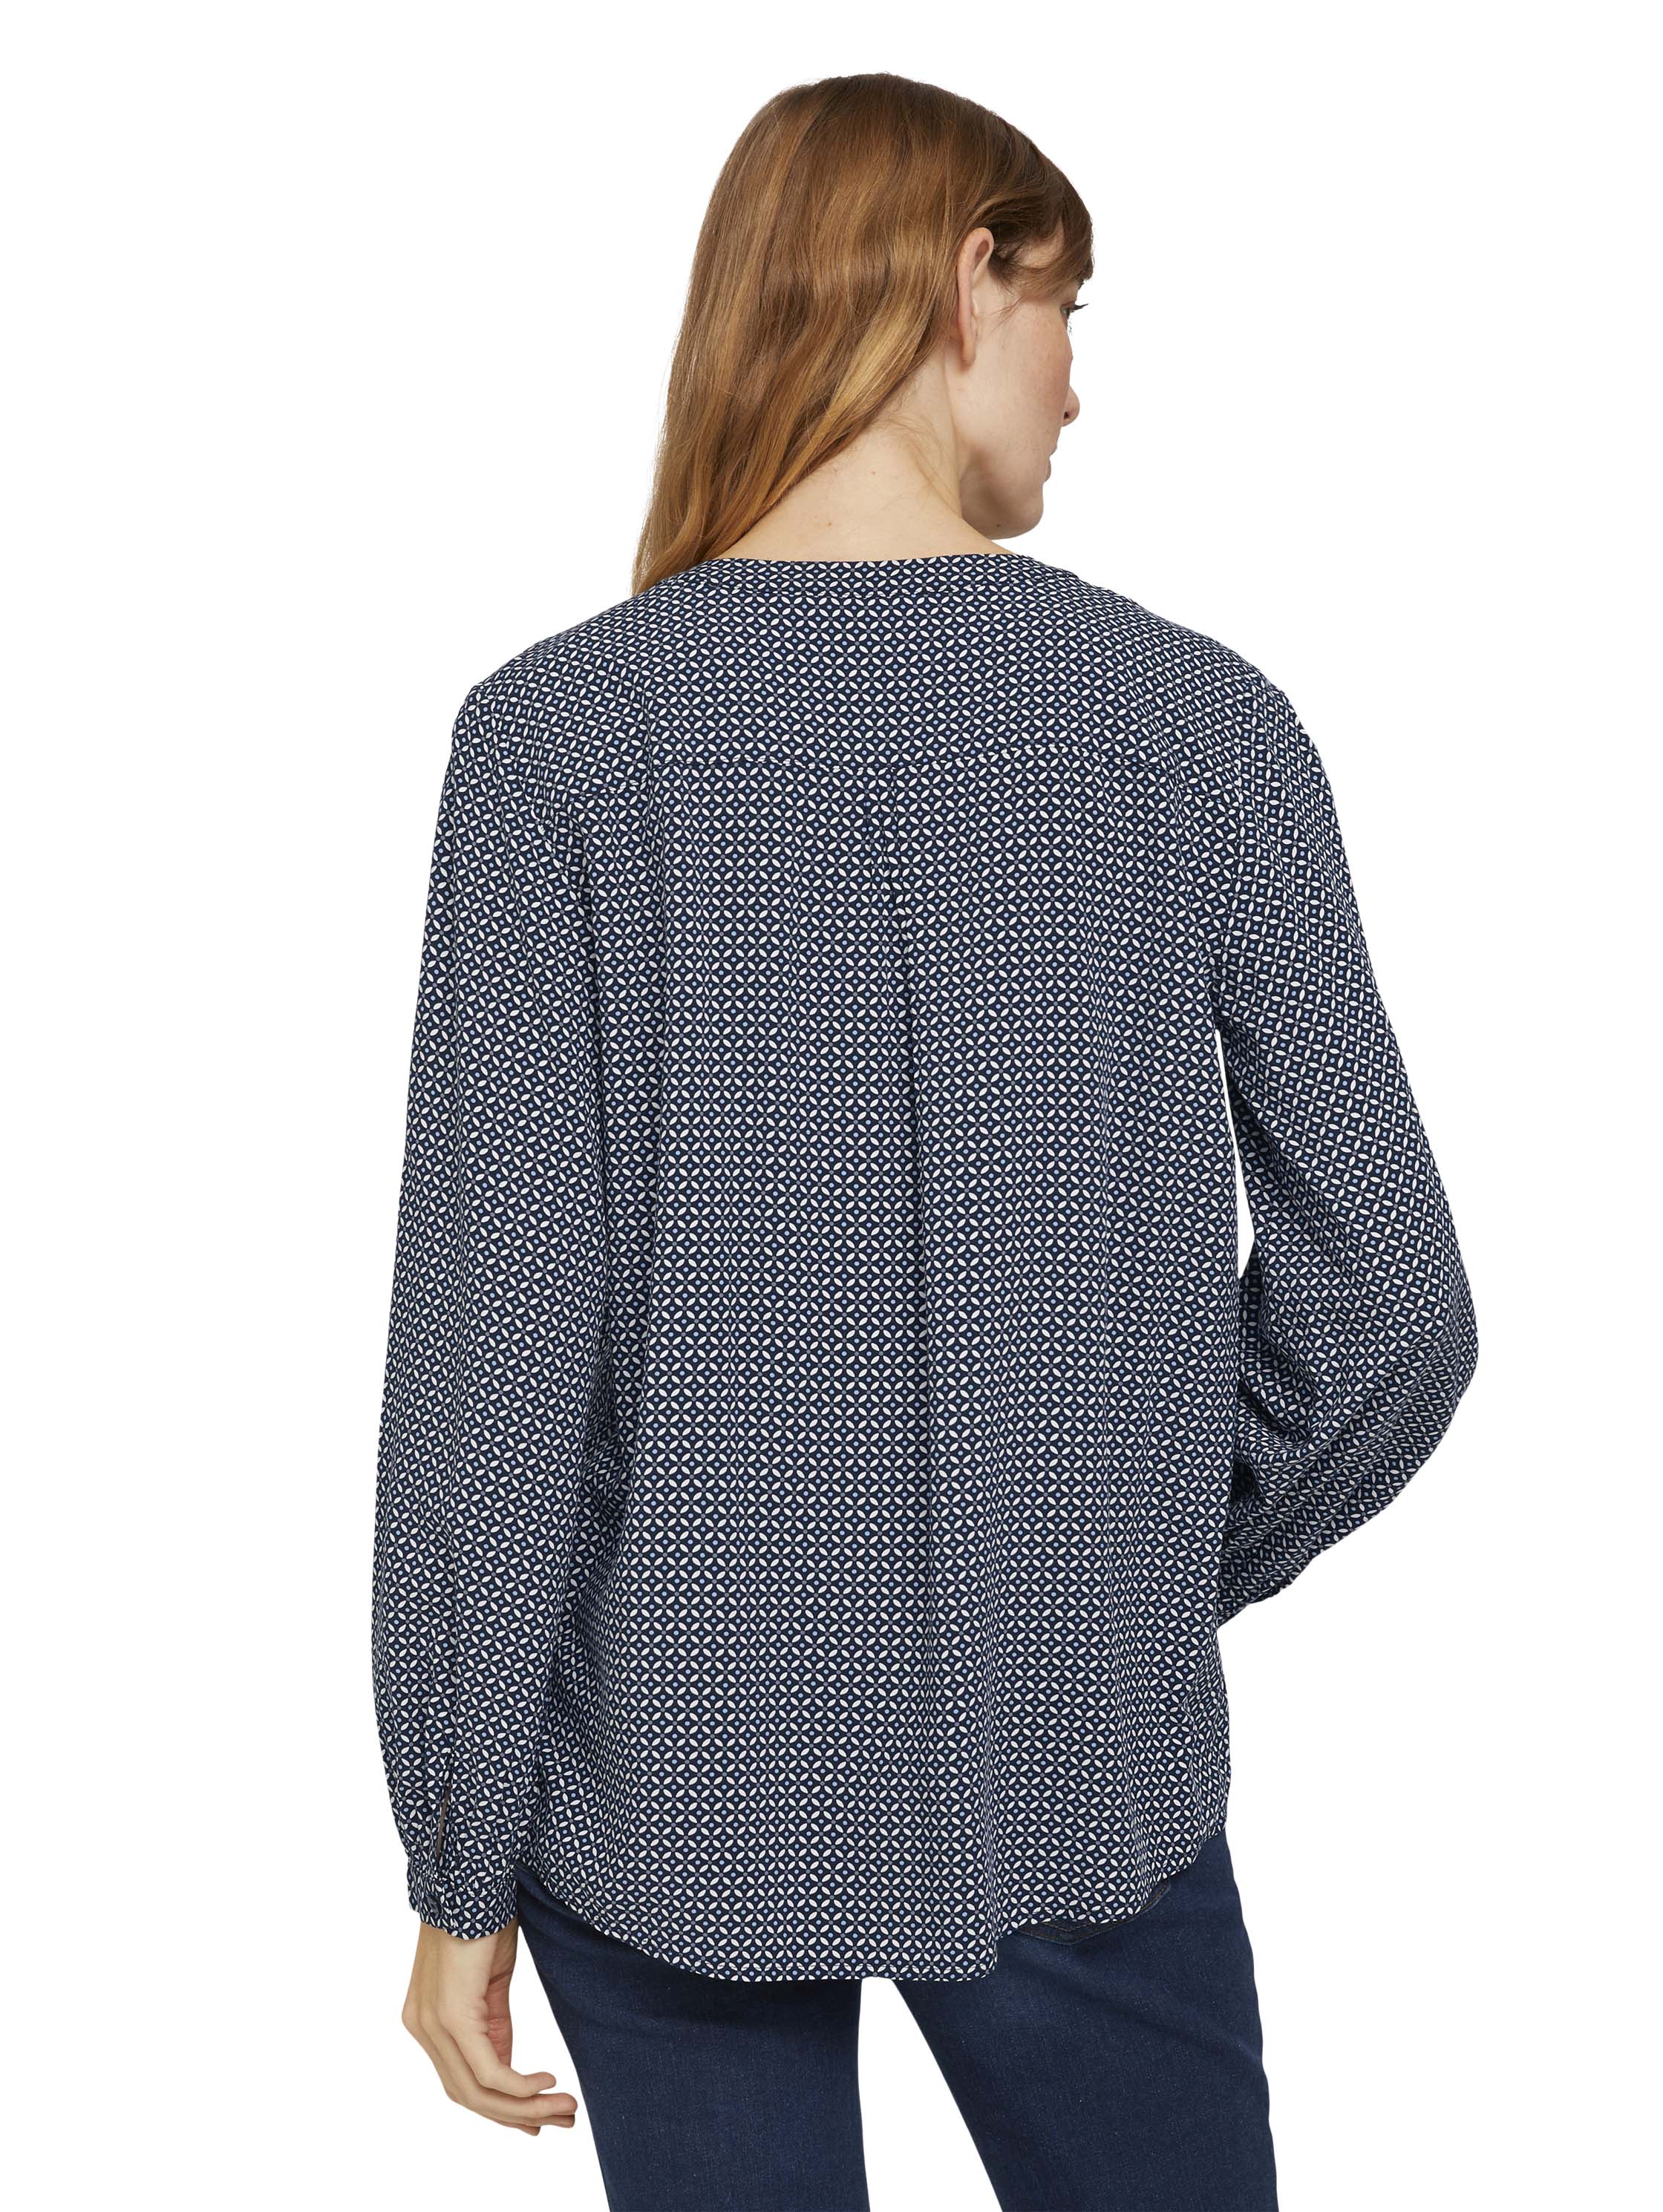 blouse feminine with print